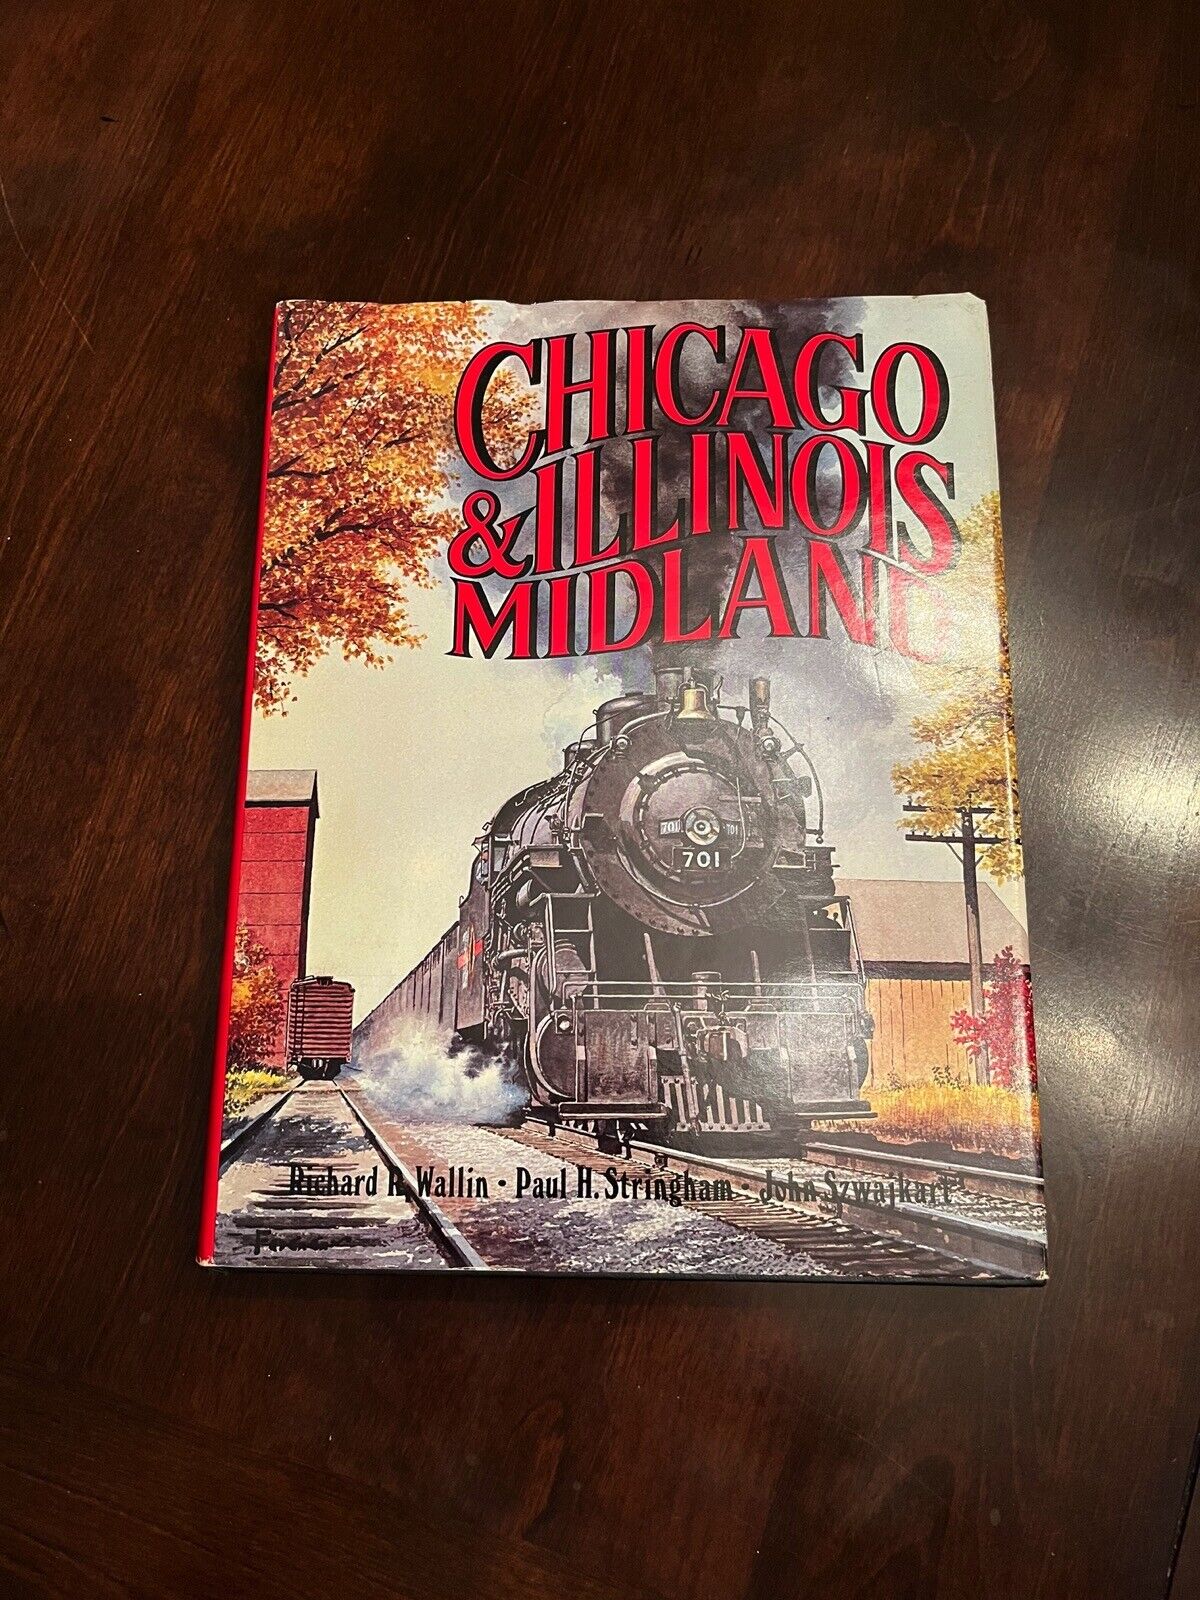 CHICAGO & ILLINOIS MIDLAND 1979 Railroad Book: Wallin/Stringham/Szajkart 240 pgs